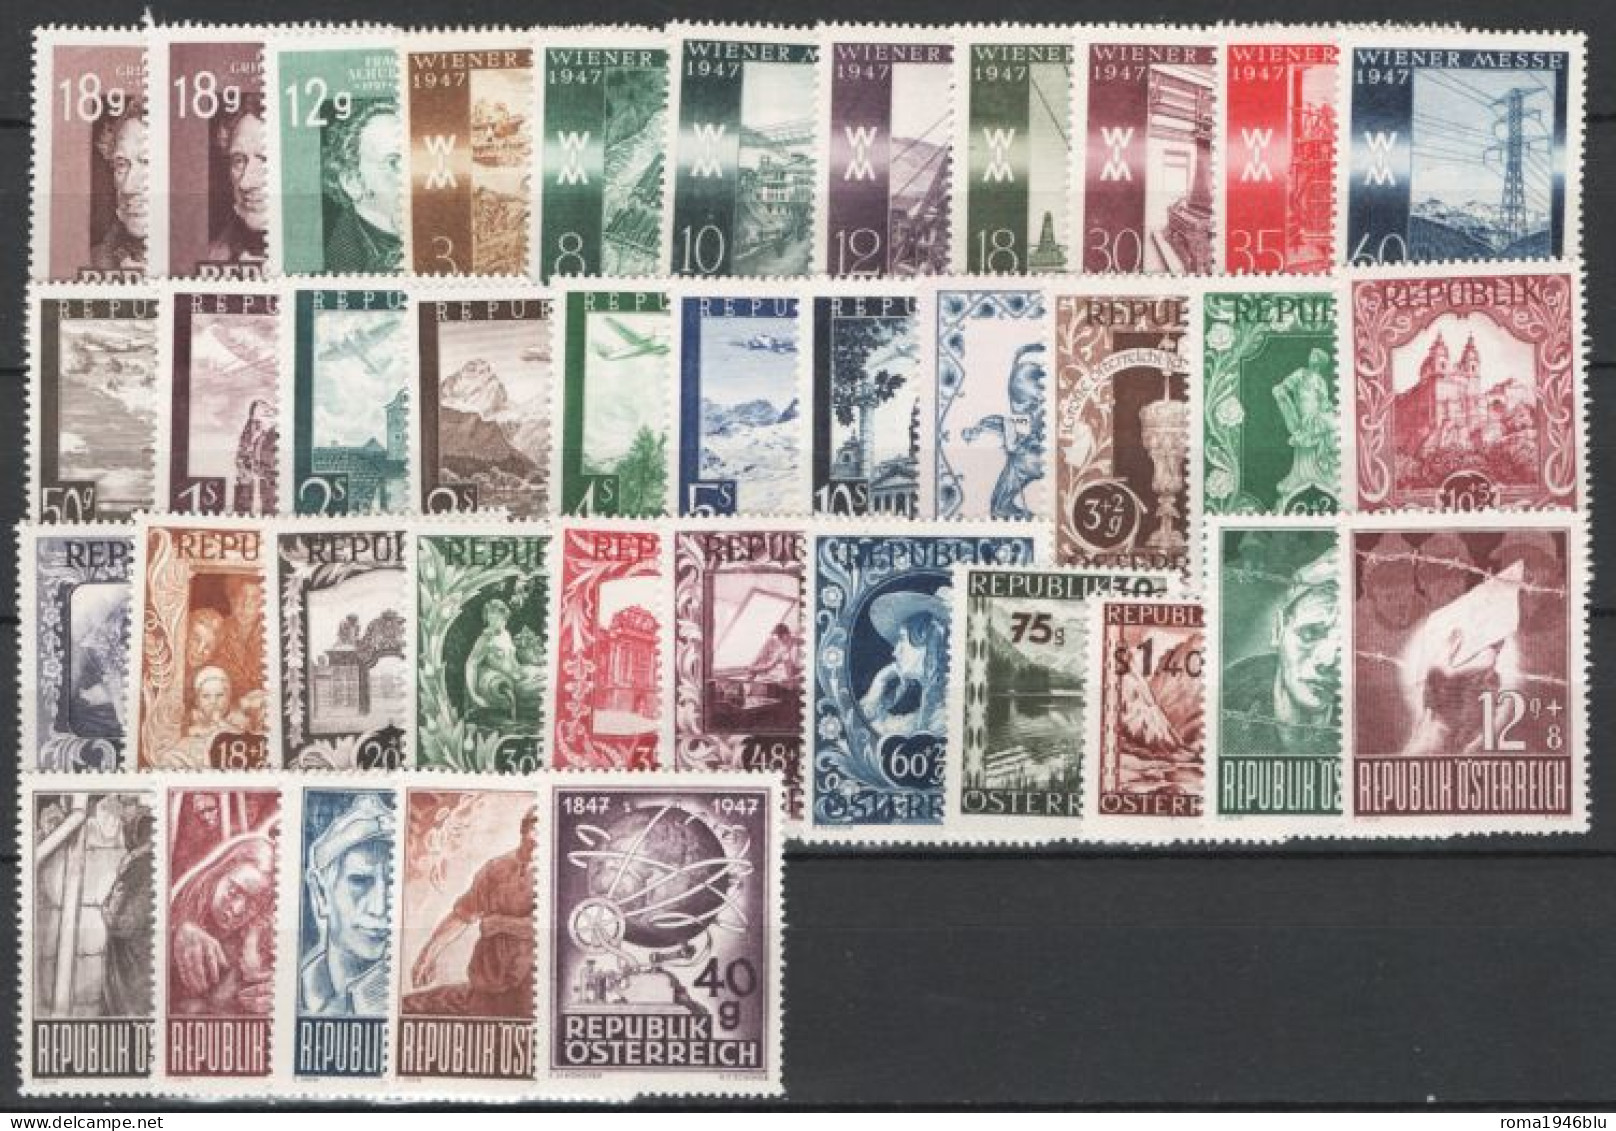 Austria 1947 Annata Completa Commemorativa  / Complete Commemorative Year Set **/MNH VF - Annate Complete